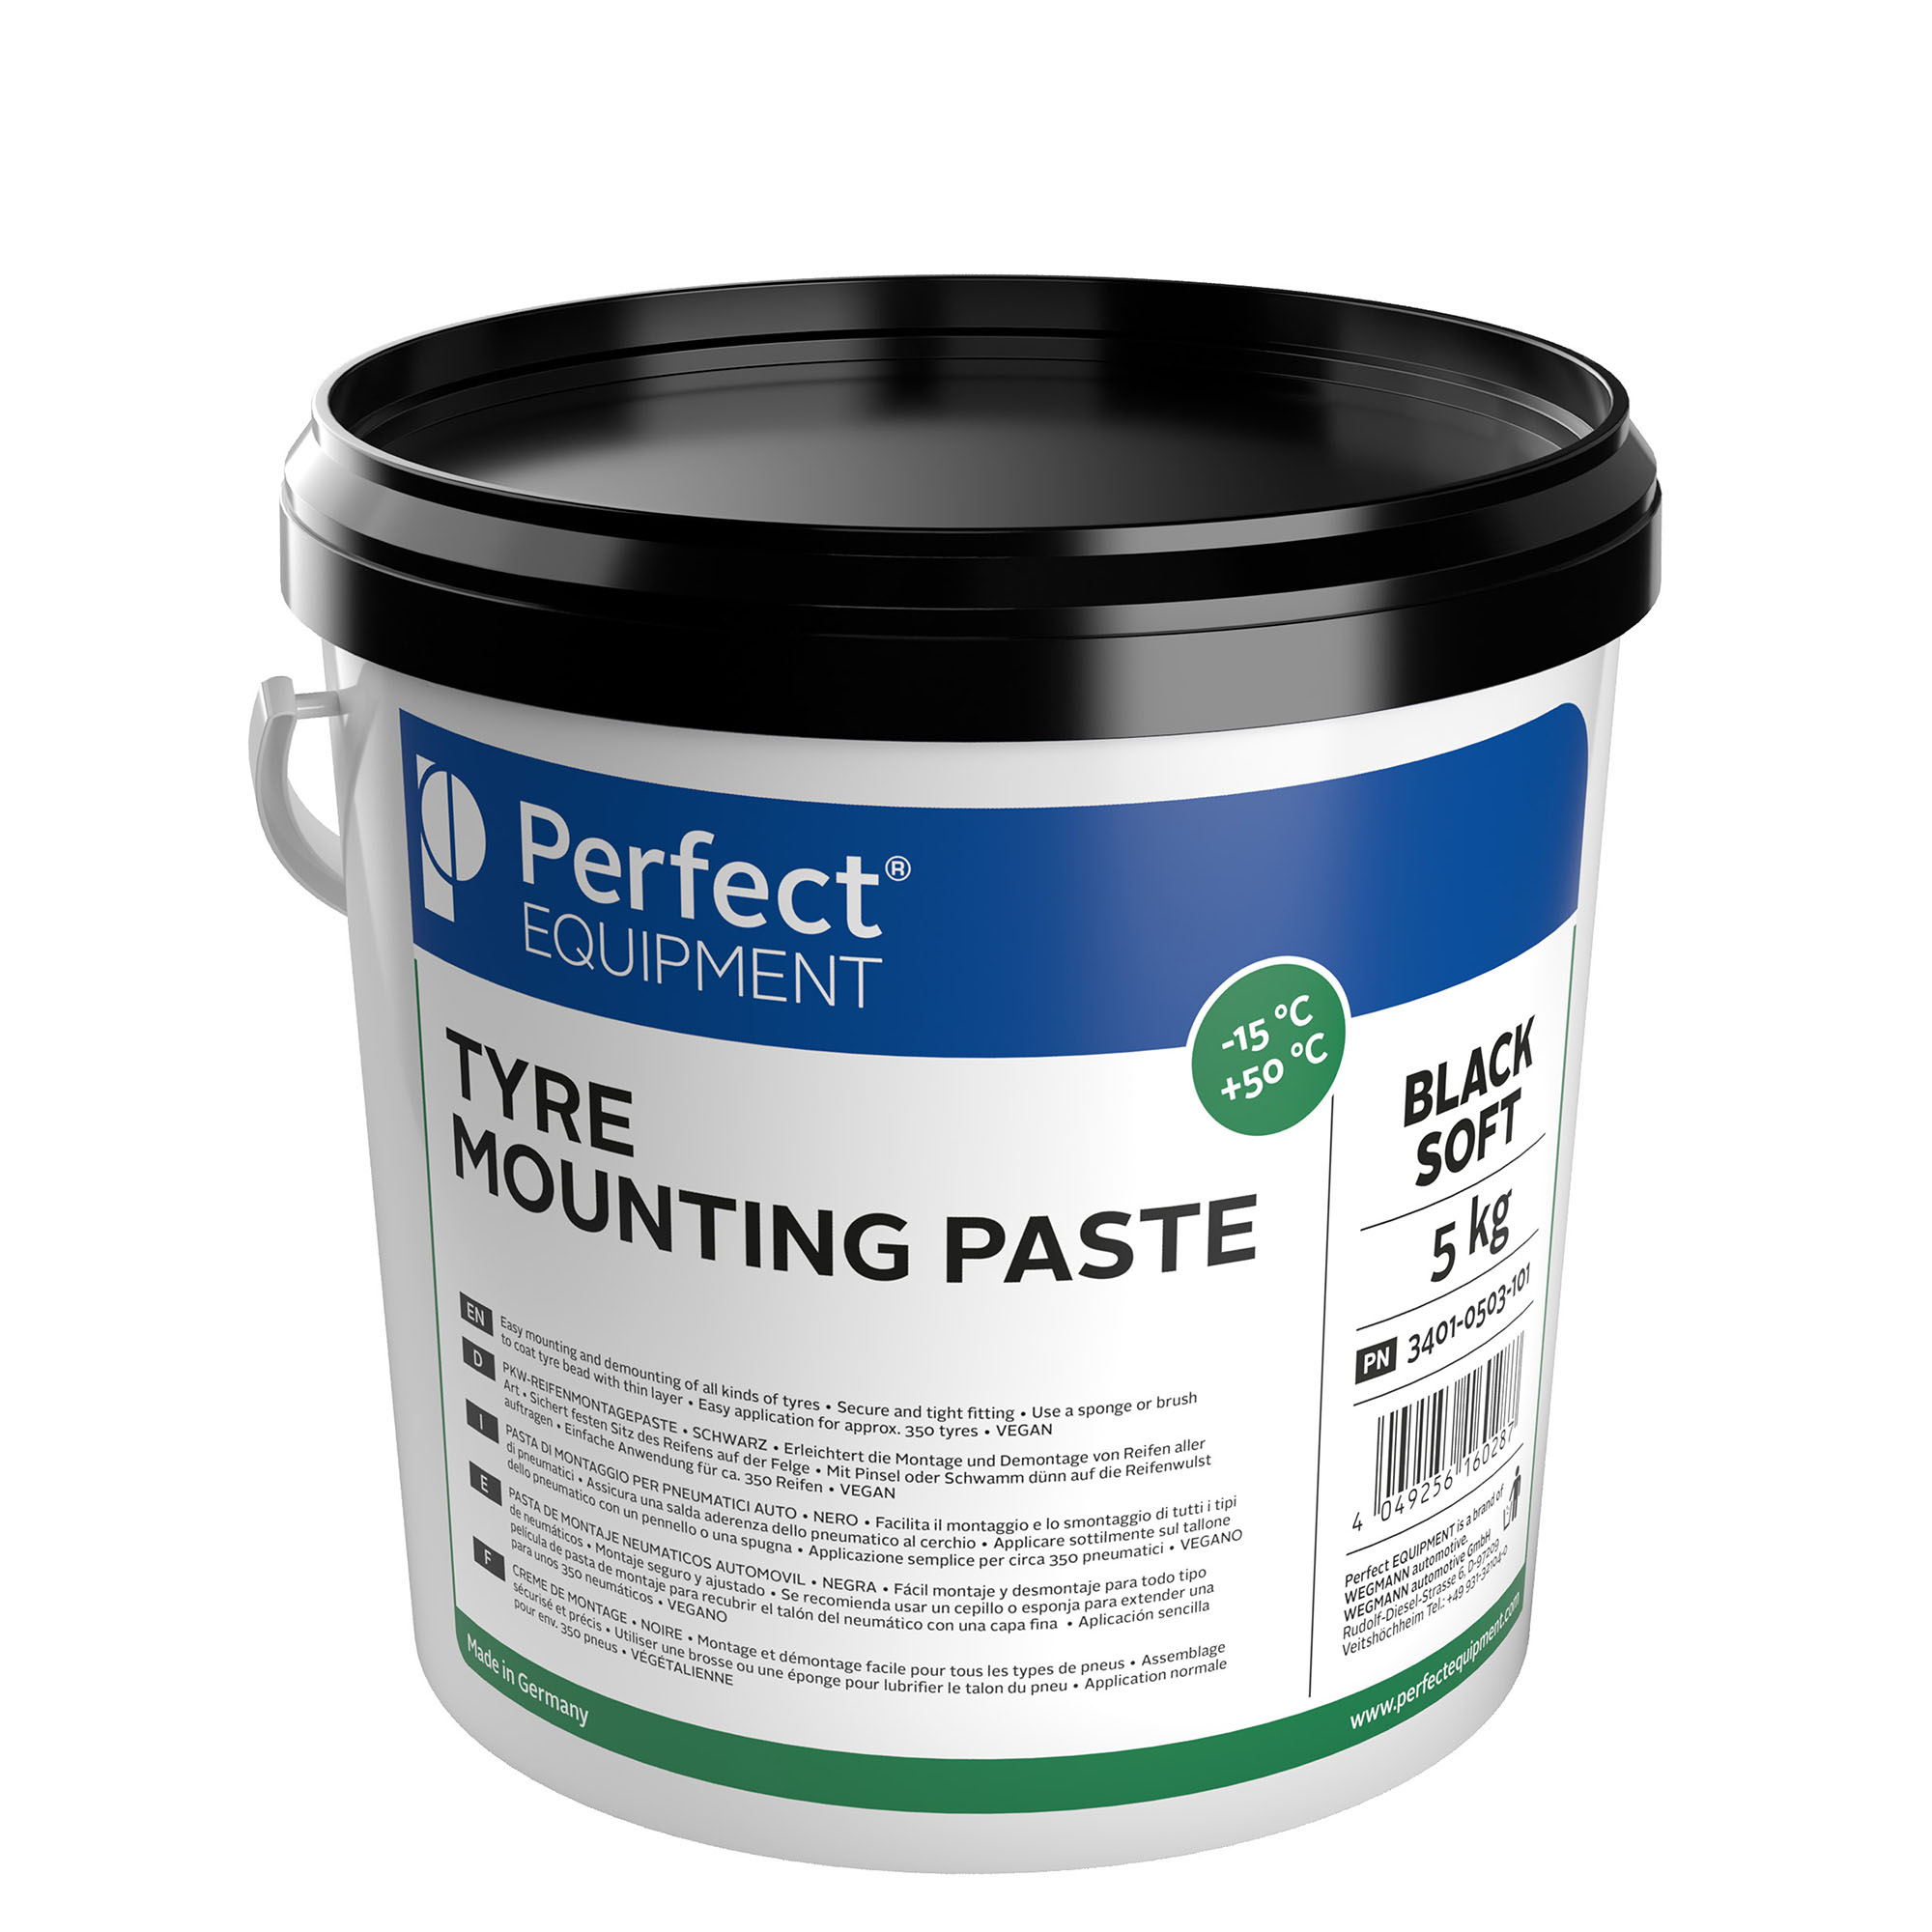 Mounting paste - black, soft, 5kg